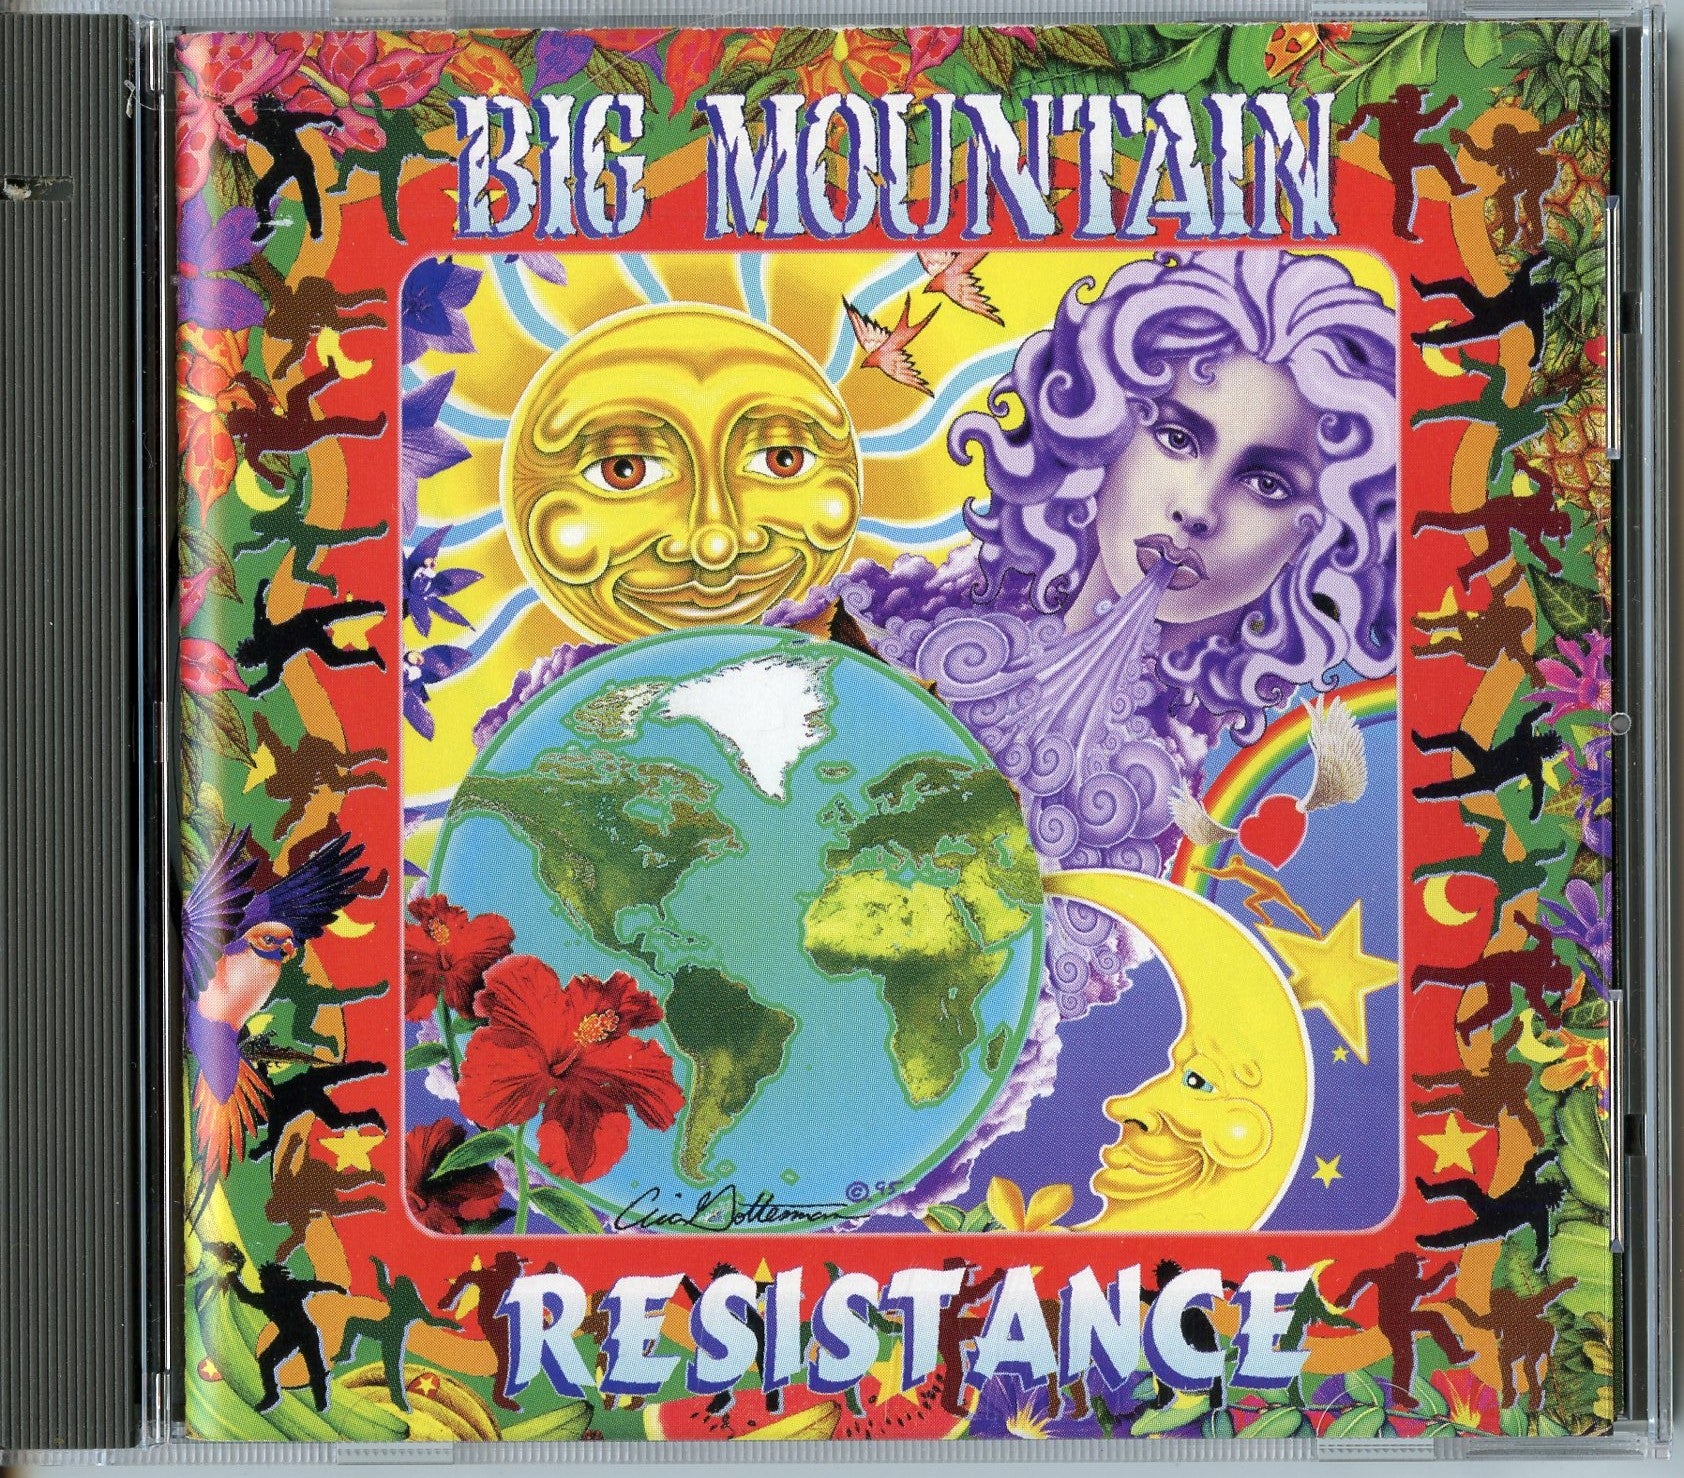 BIG MOUNTAIN - "RESISTANCE" -  1995 ORIGINAL PRESSING CD ALBUM IN FACTORY SHRINK